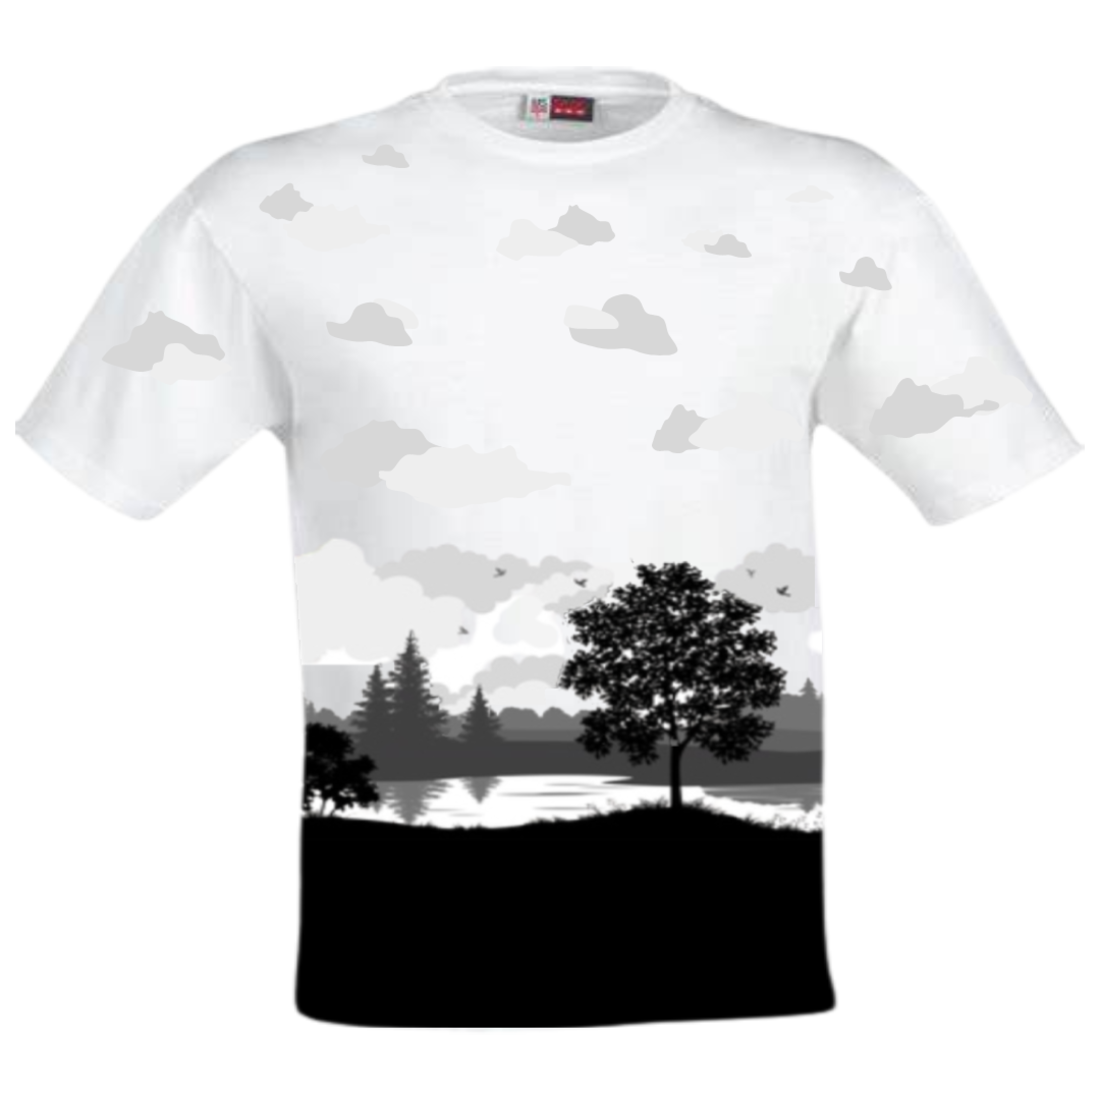 Eagle T-shirt Designs - MasterBundles